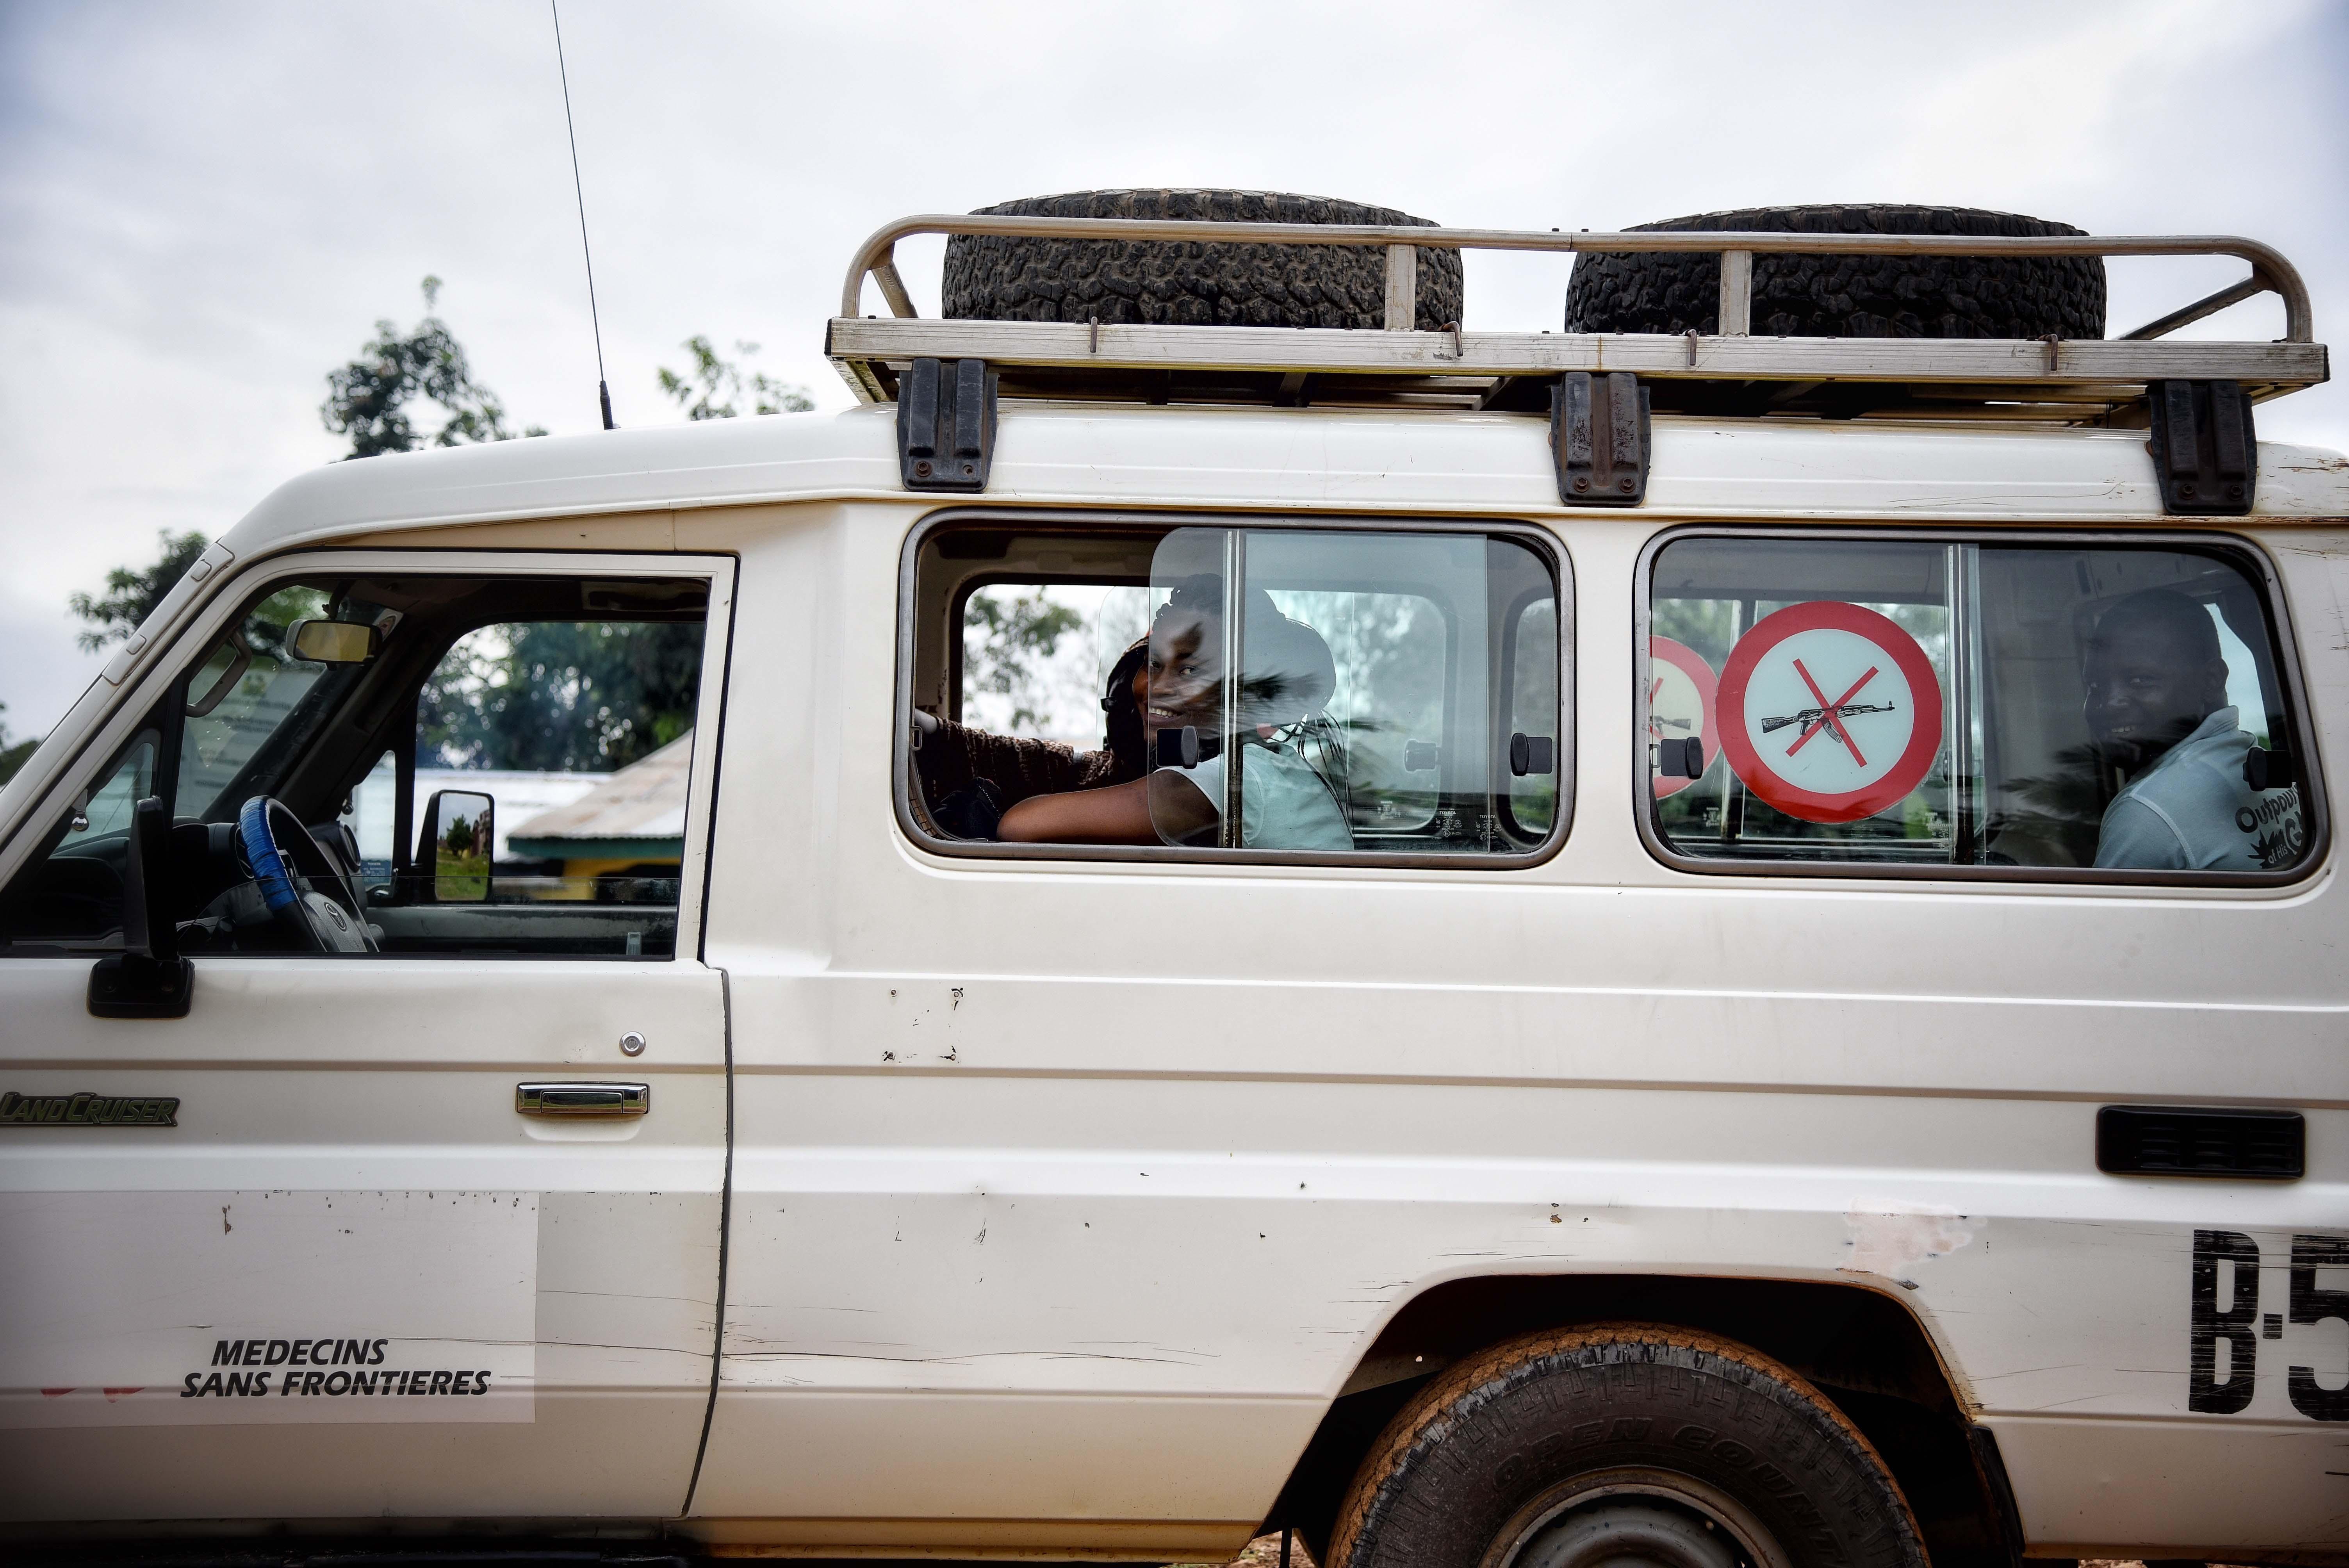 The MSF outreach team in an MSF vehicle in Kenema, Sierra Leone